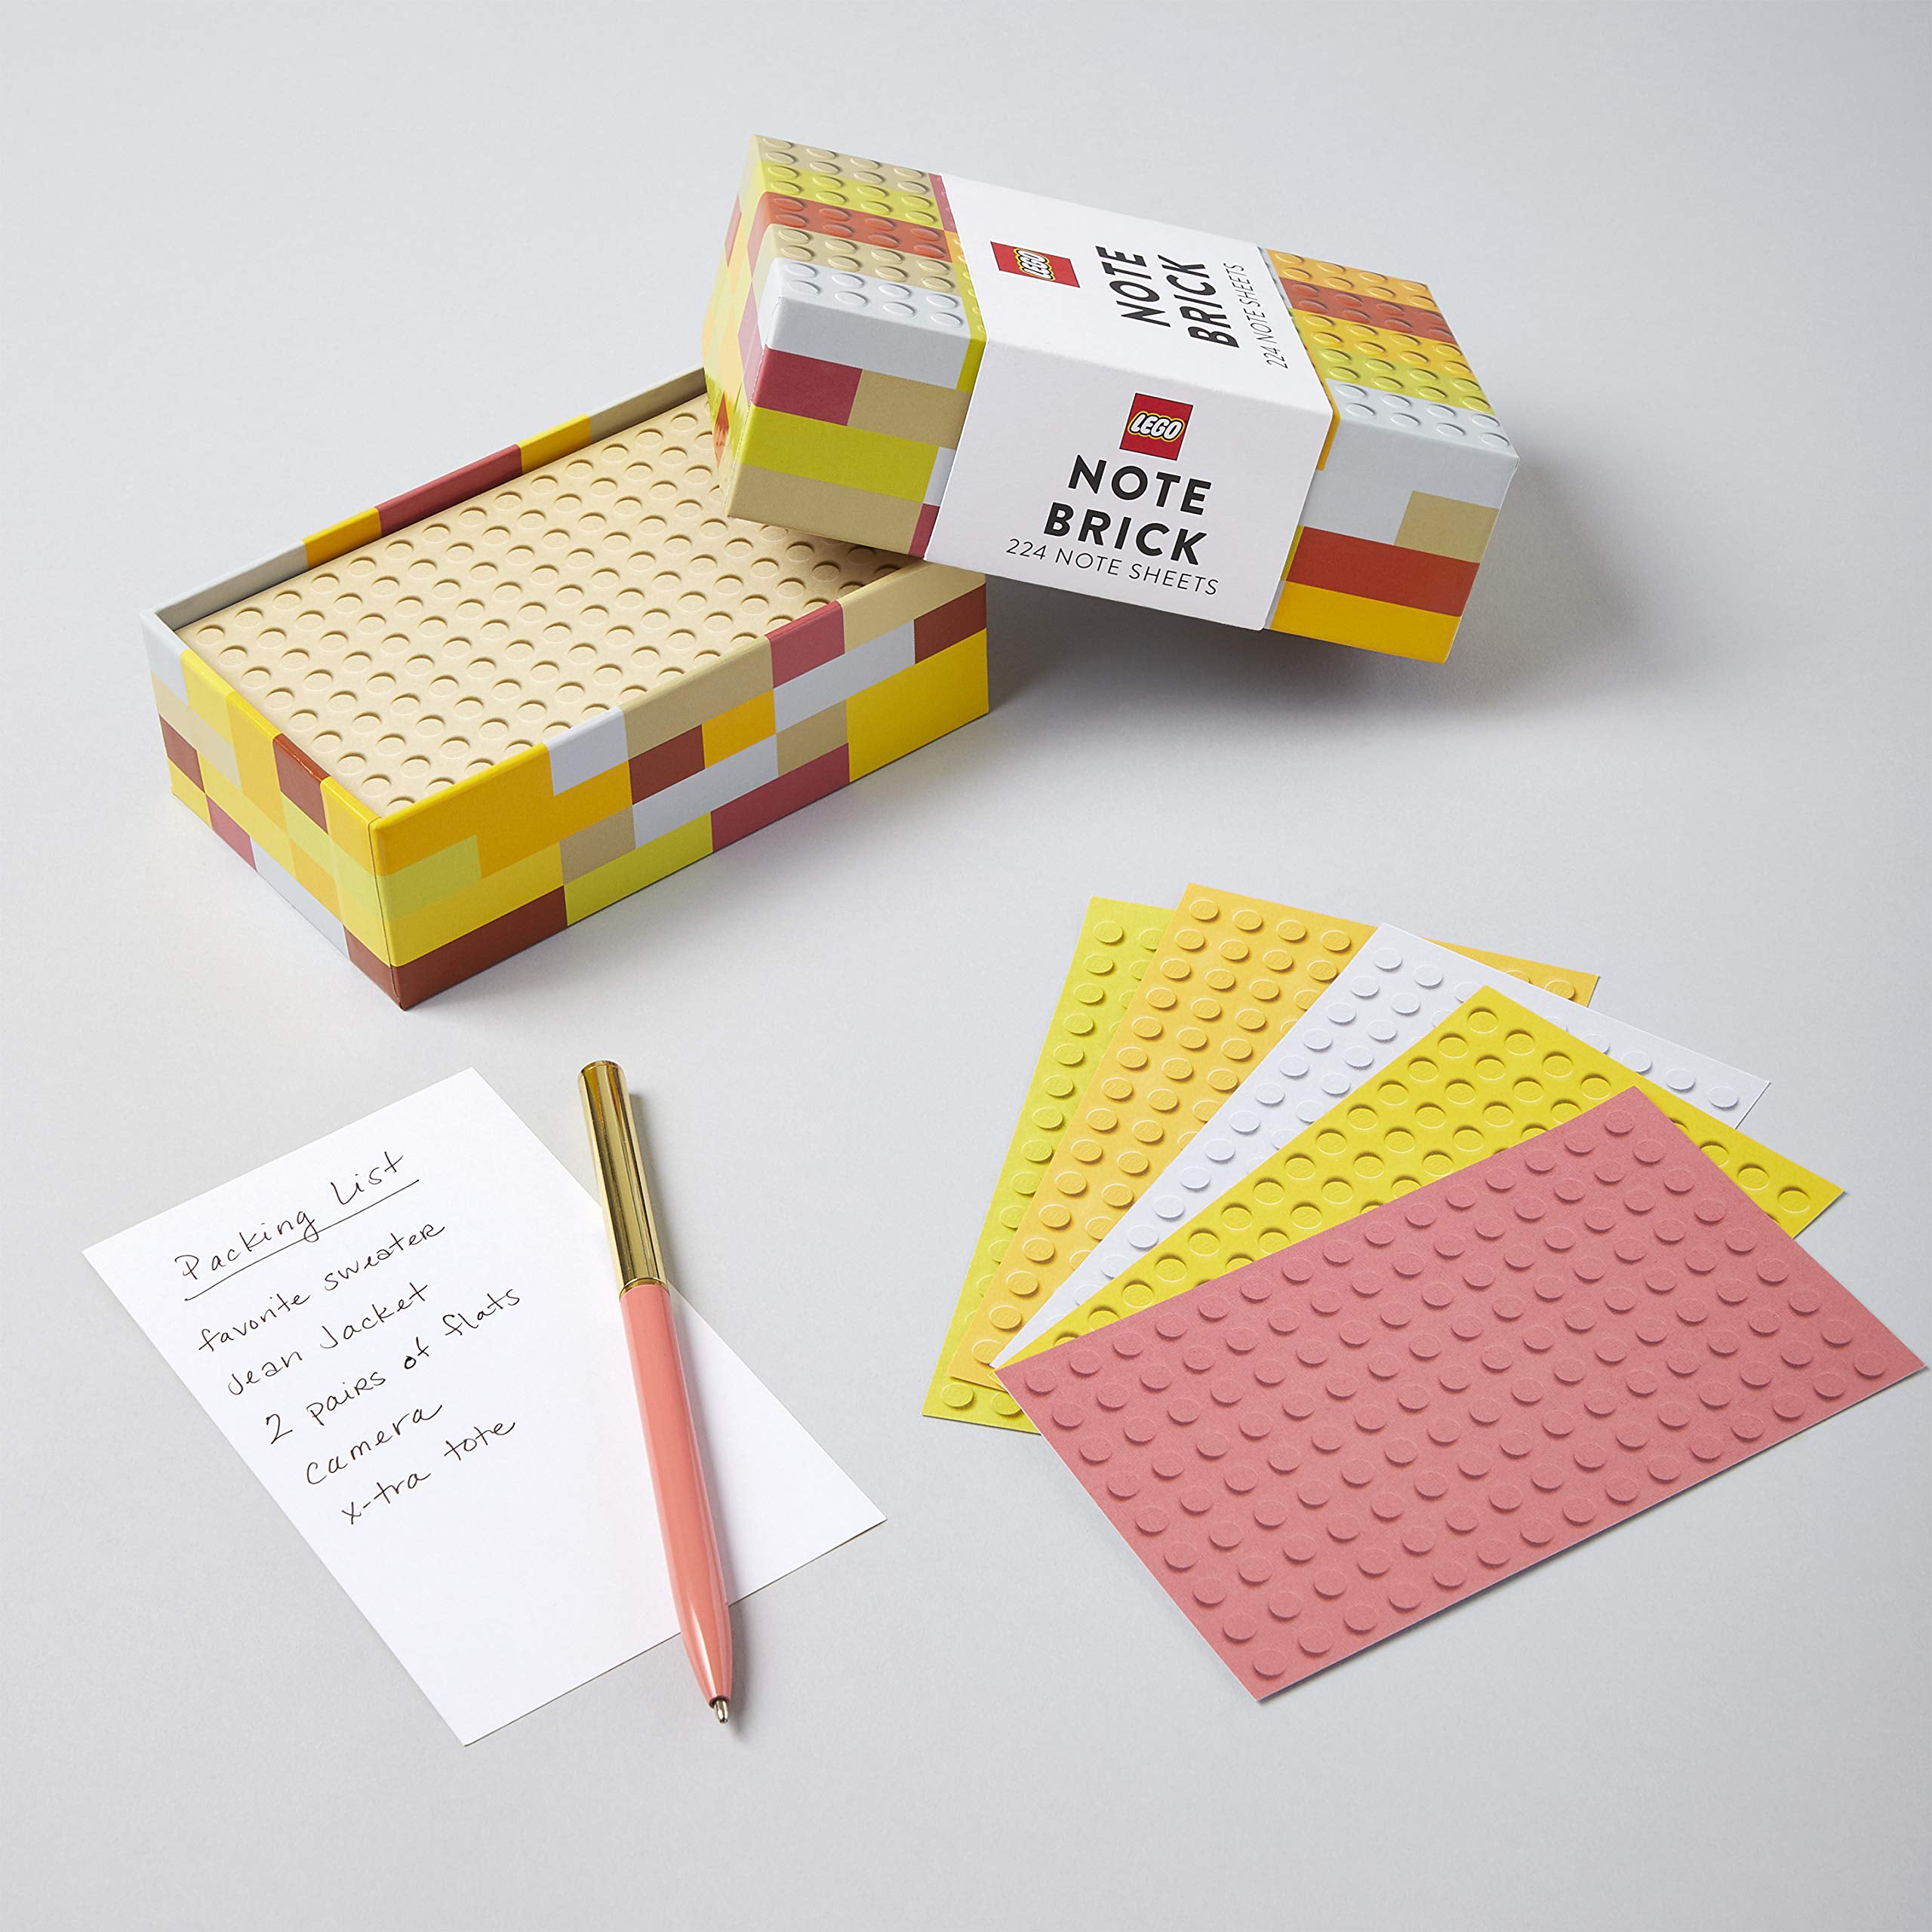 book-lego-note-brick-yellow-orange- (4)